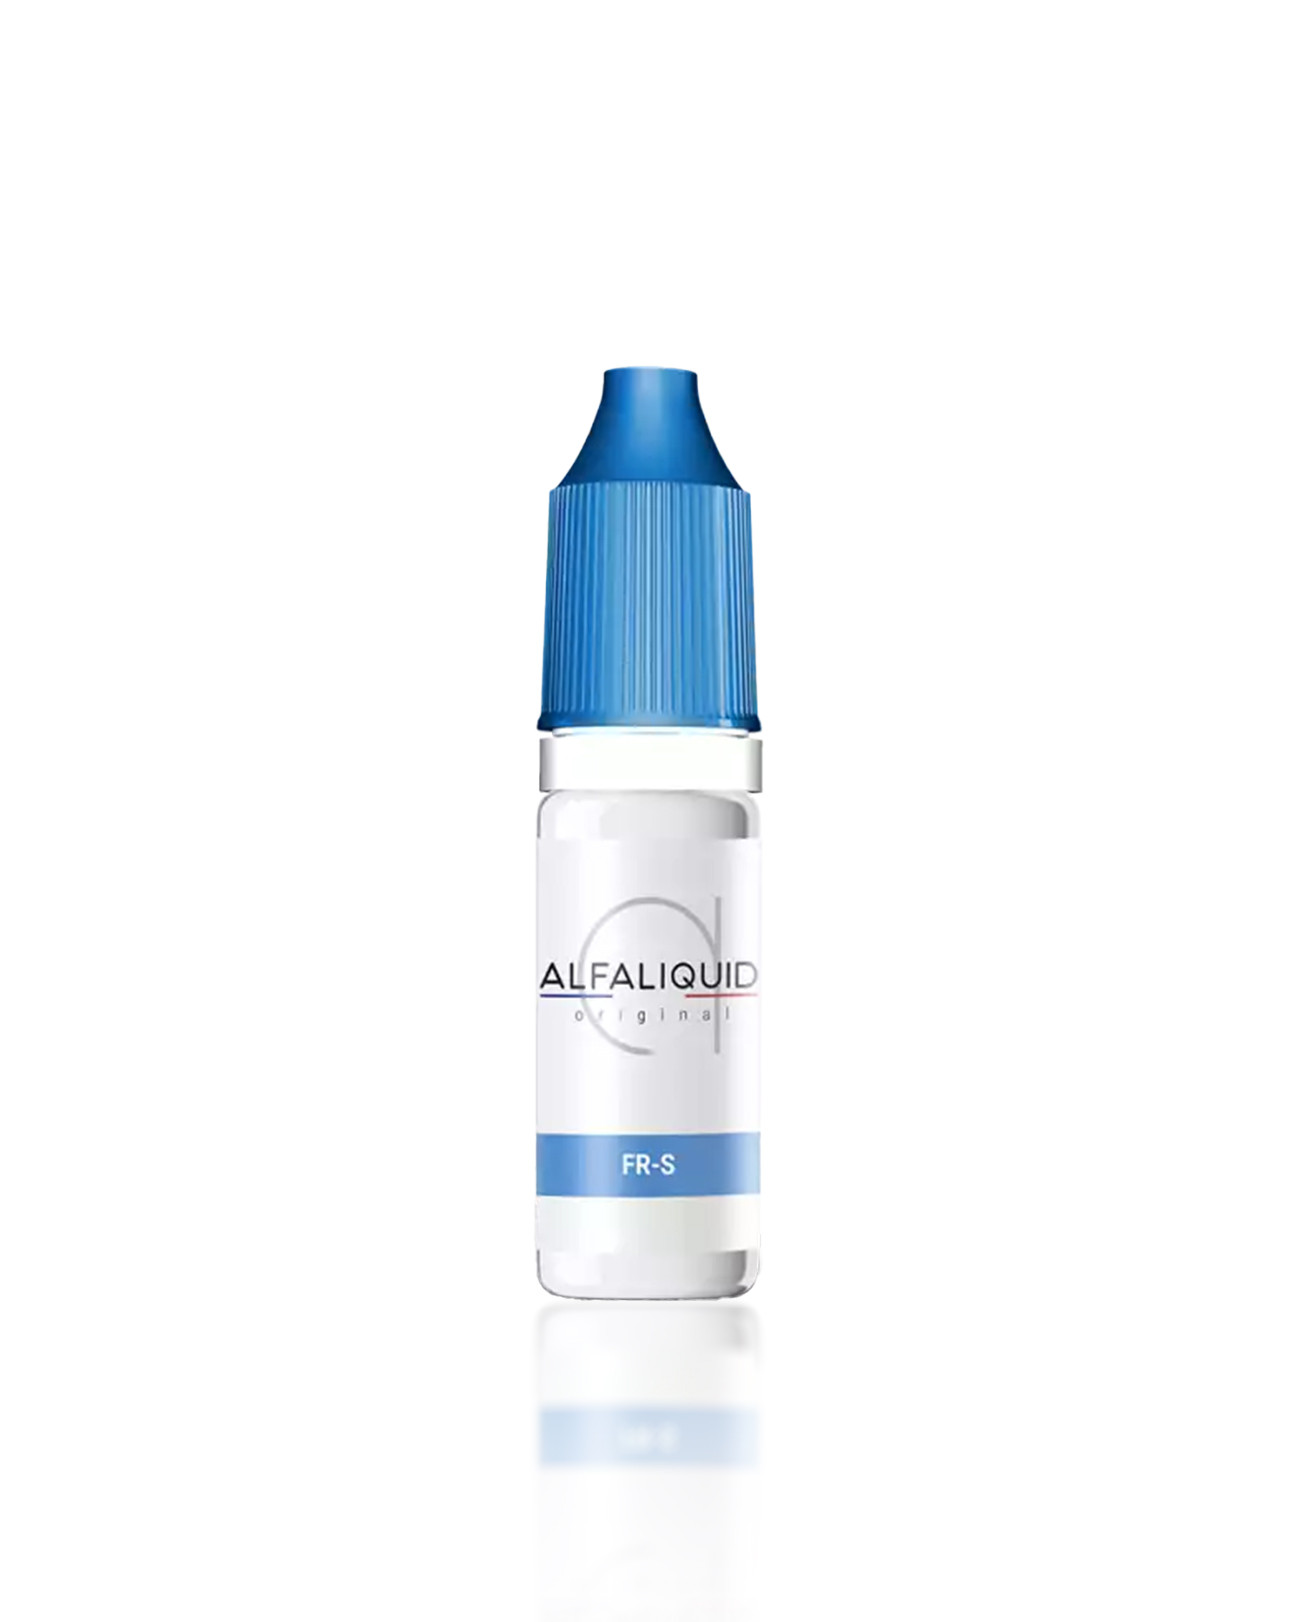 E-liquide 10 ml Alfaliquid Original FR-S